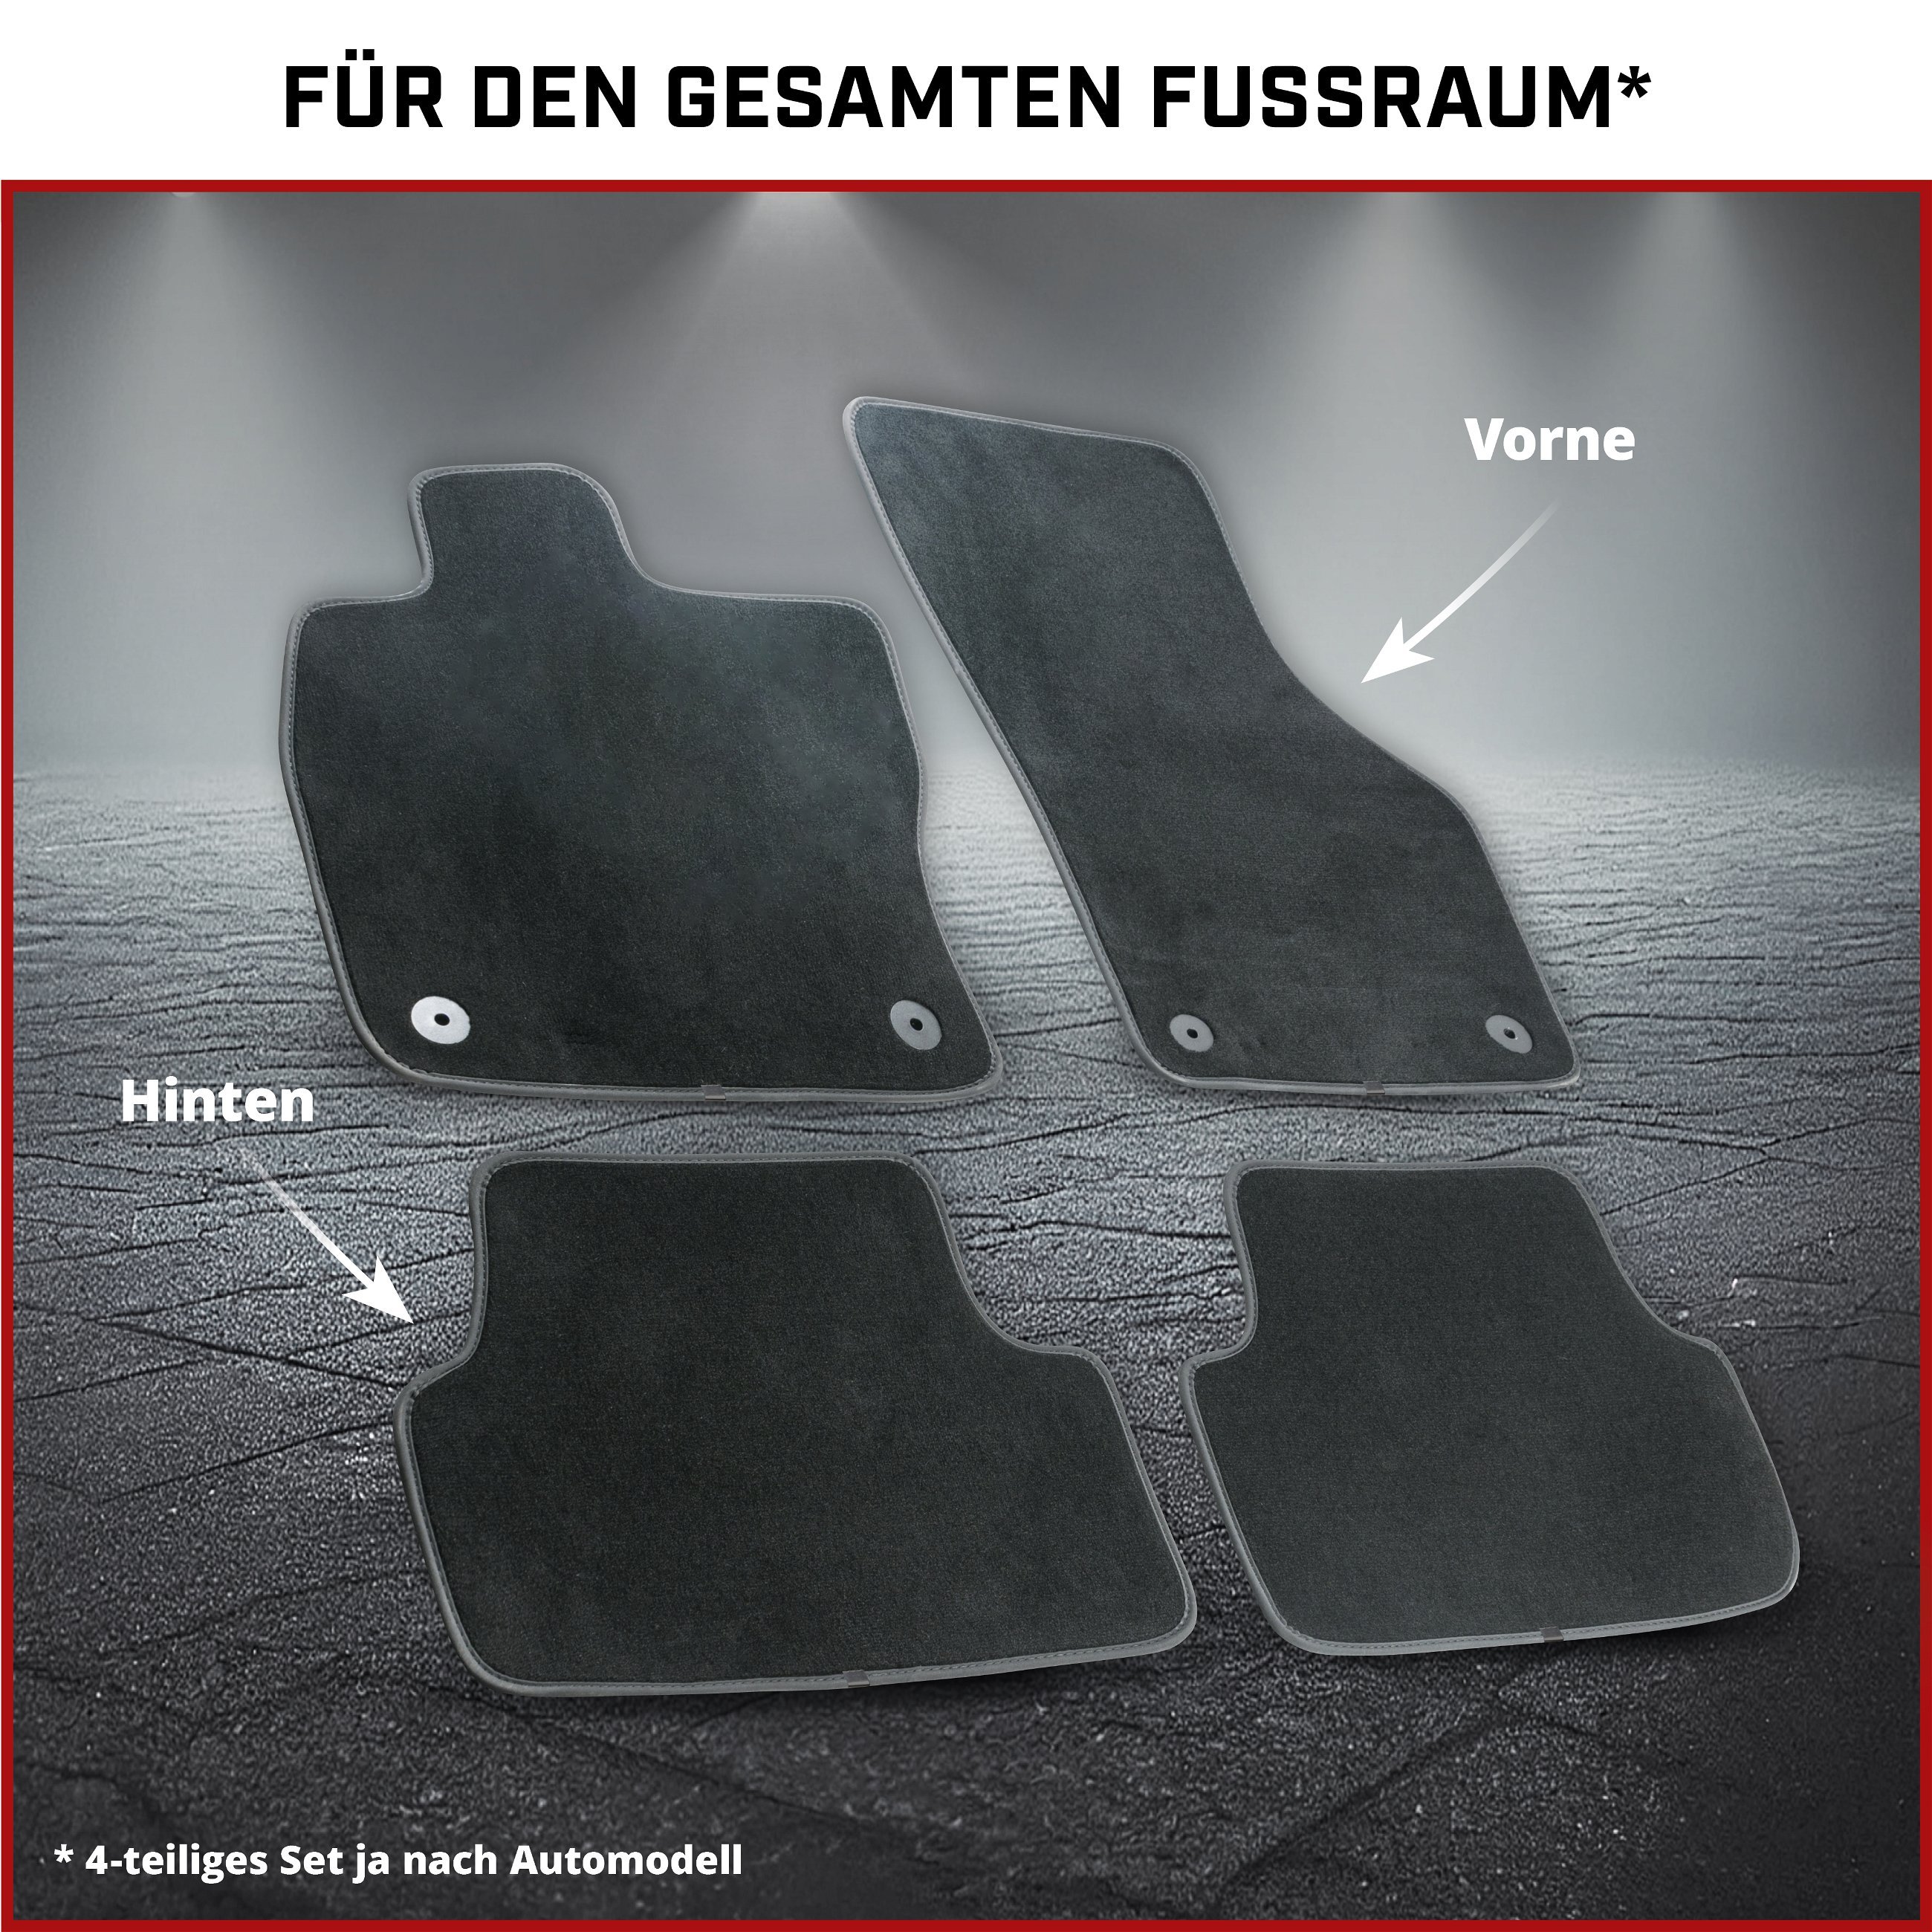 Premium Fußmatten für VW Golf IV 08/1997-12/2007, Golf IV Variant 05/1999-06/2006, VW New Beetle 01/1998-11/2010, VW Bora 10/1998-12/2013